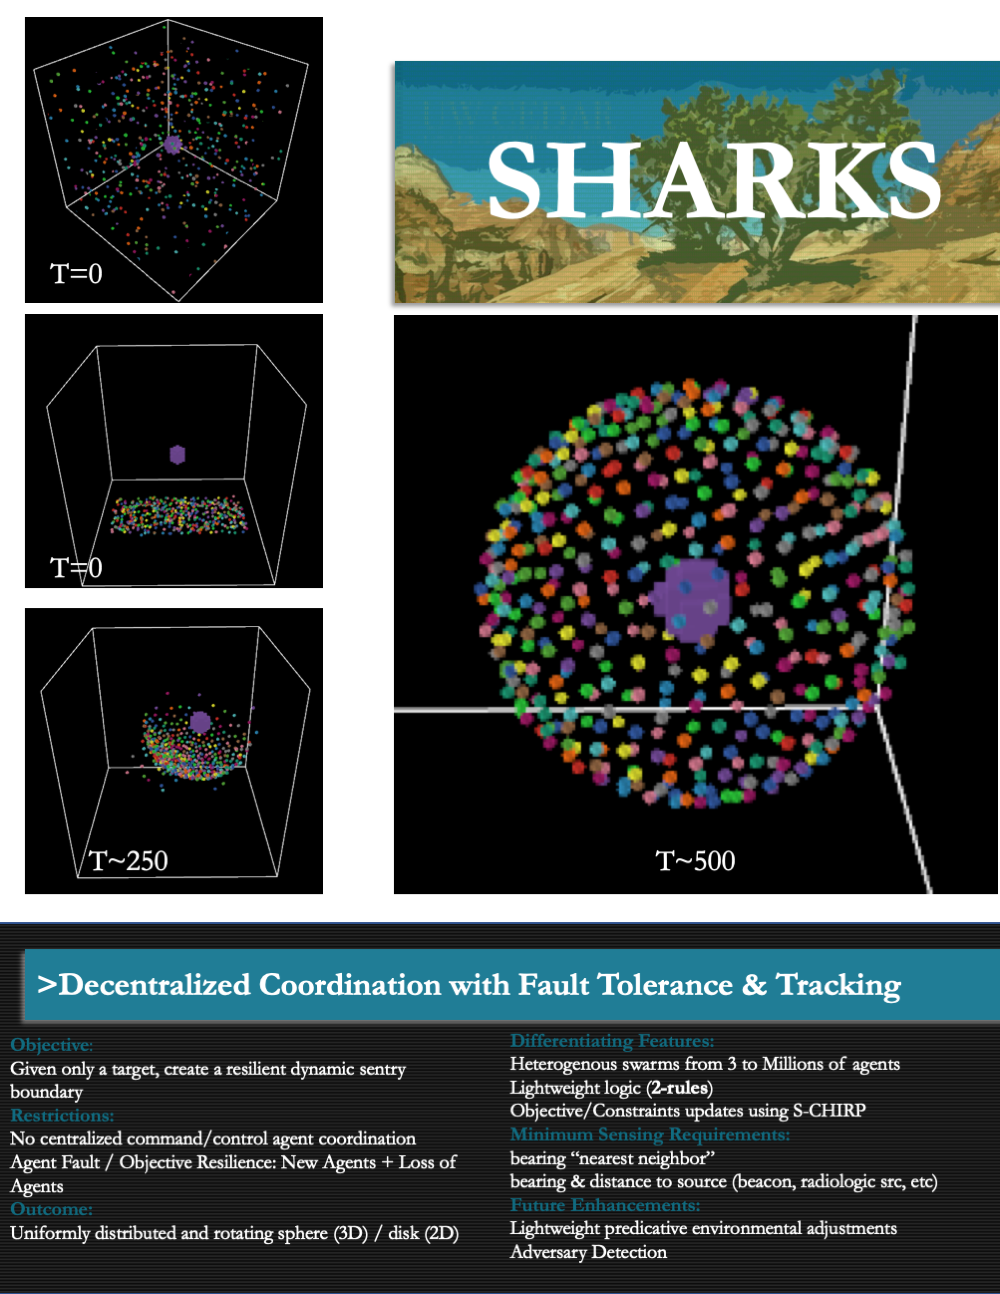 Promotional Poster for SHARKS 